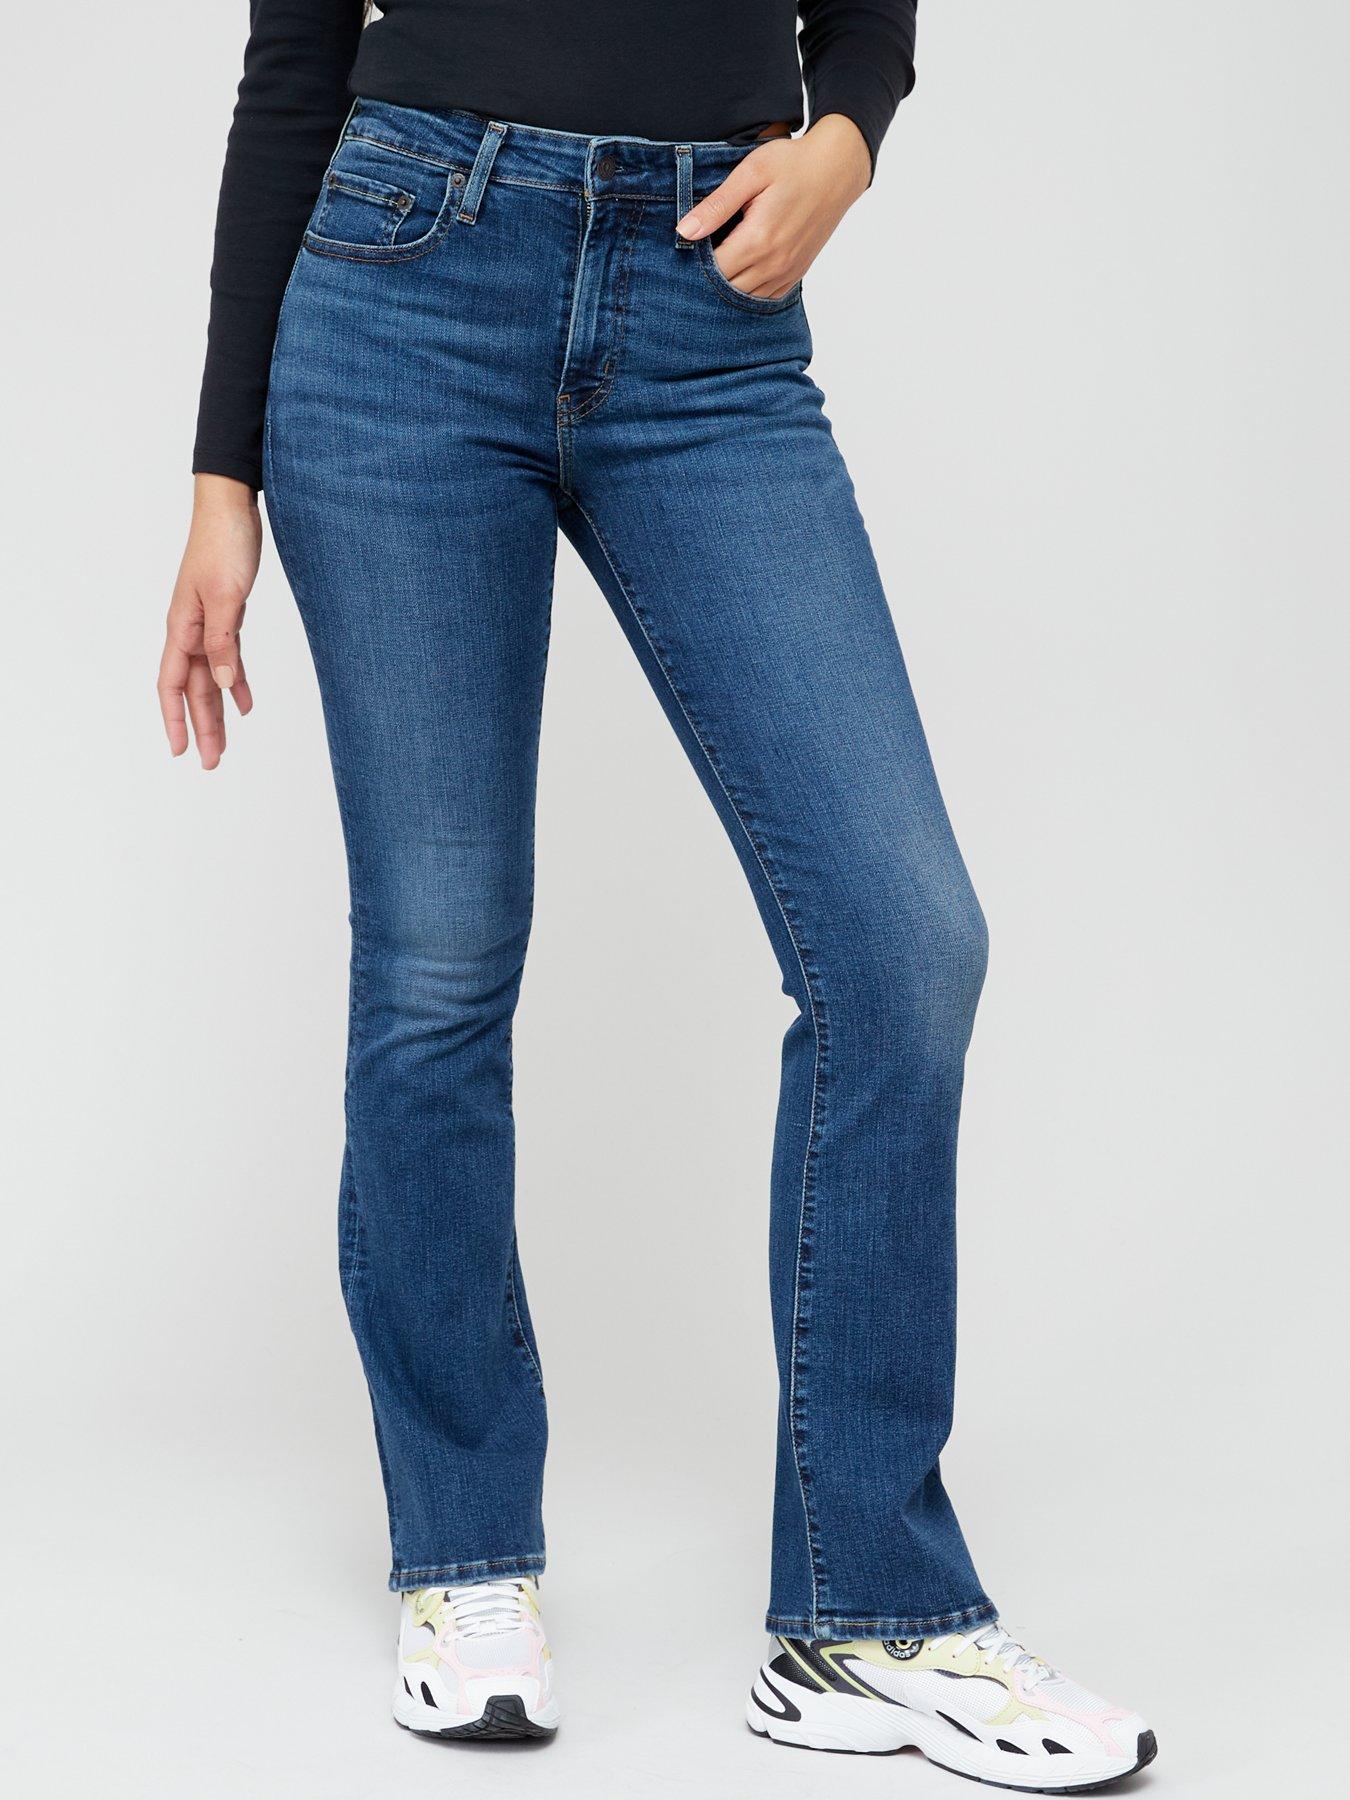 Levi's Original Women's 725 High Rise Bootcut Jeans